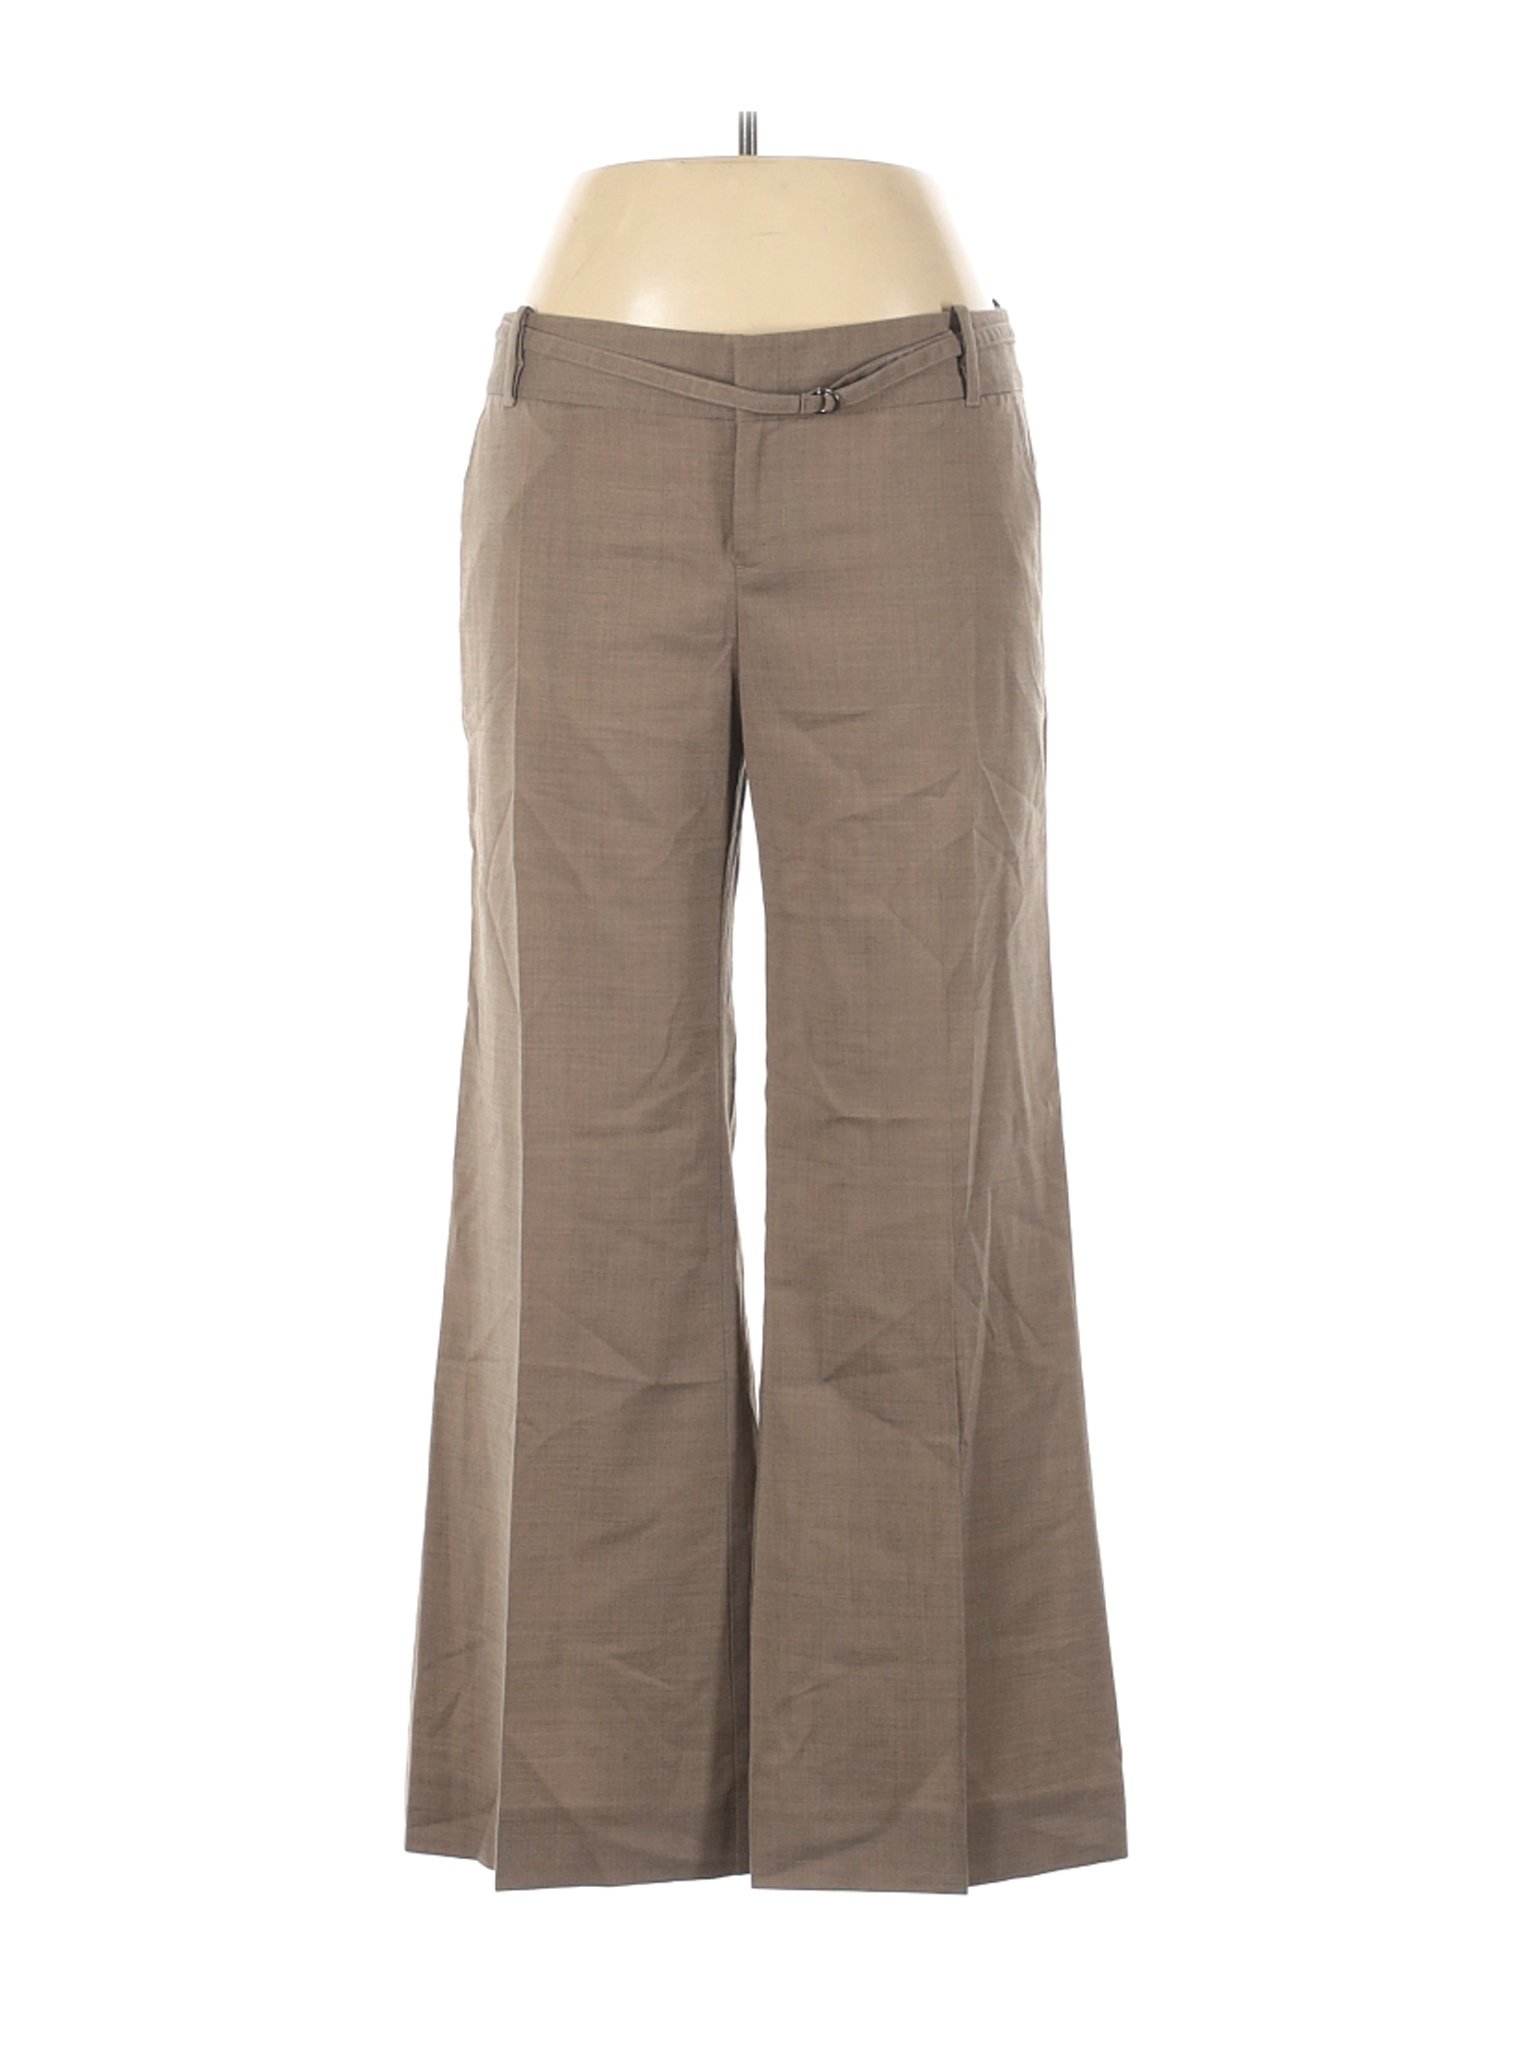 Gap Women Brown Wool Pants 10 | eBay